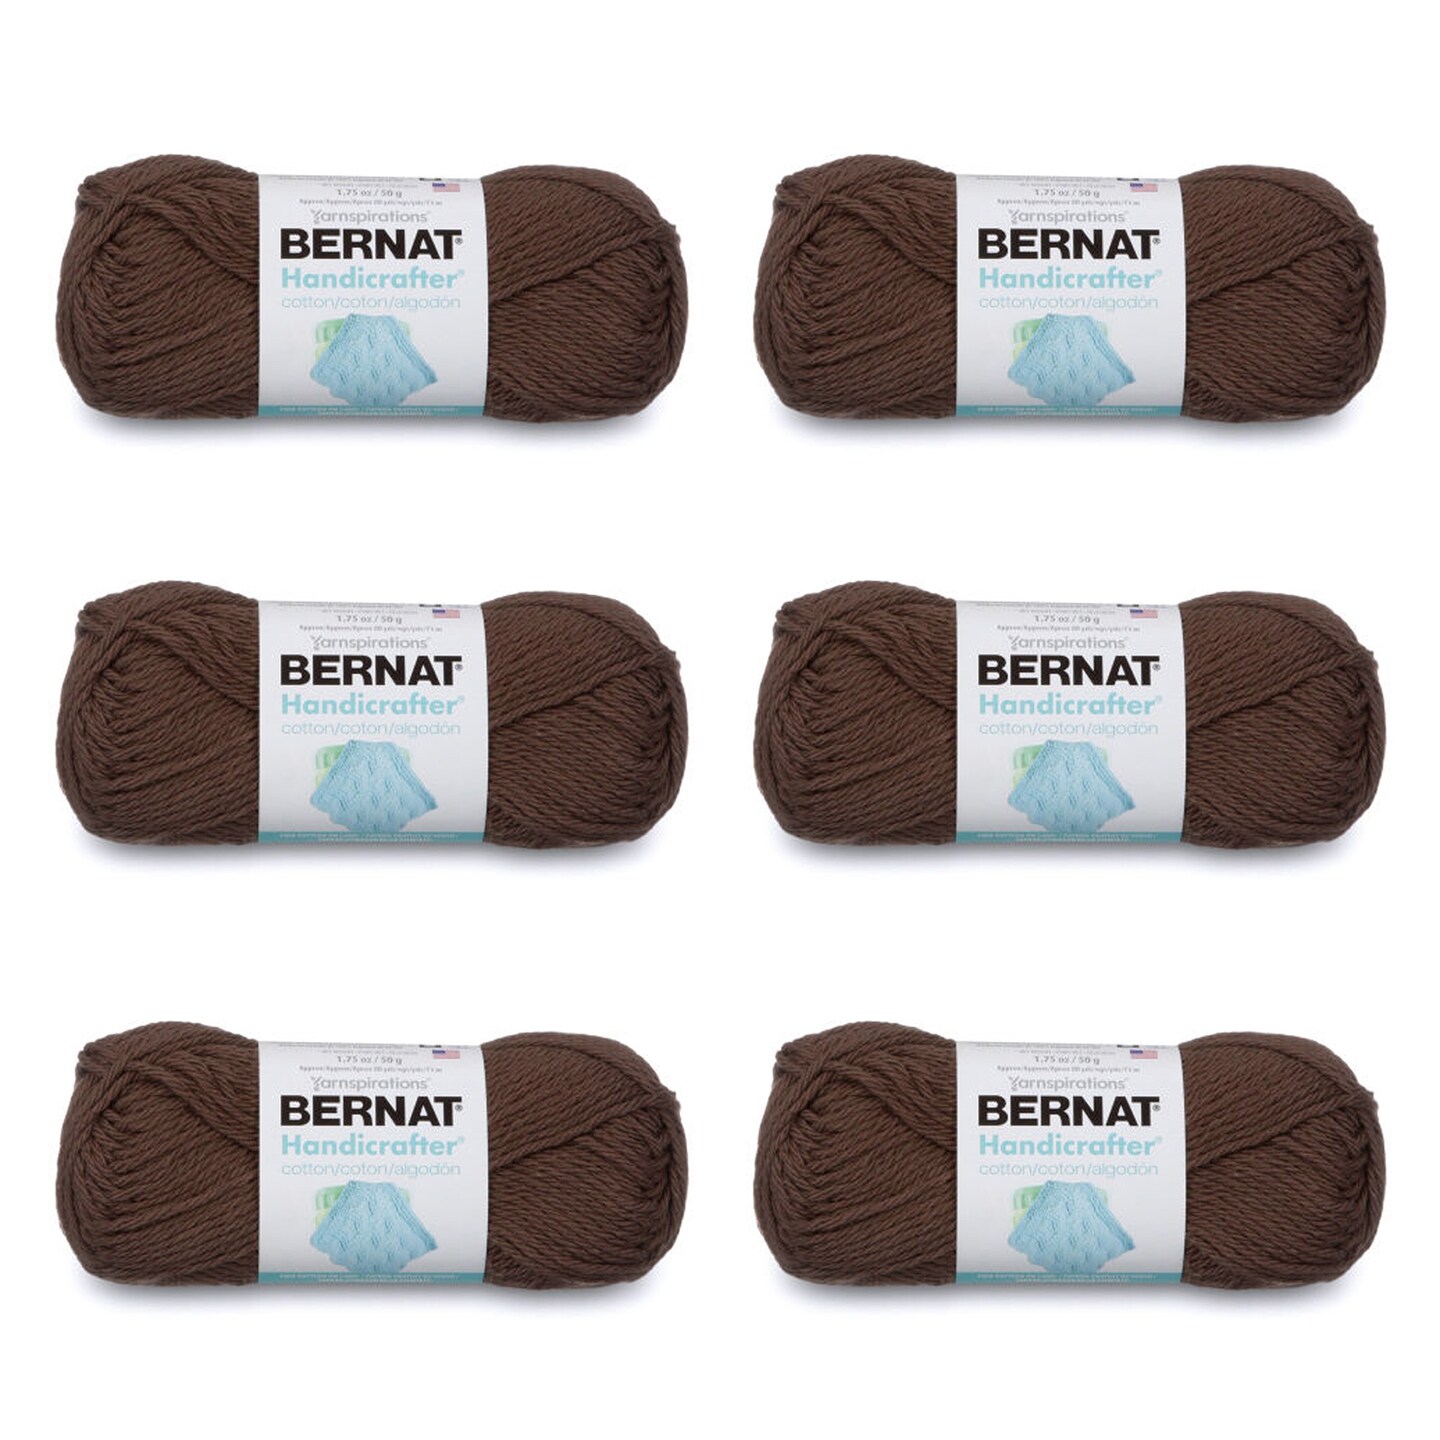 Bernat Handicrafter Cotton Warm Brown Yarn - 6 Pack of 50g/1.75oz - Cotton  - 4 Medium (Worsted) - 80 Yards - Knitting/Crochet